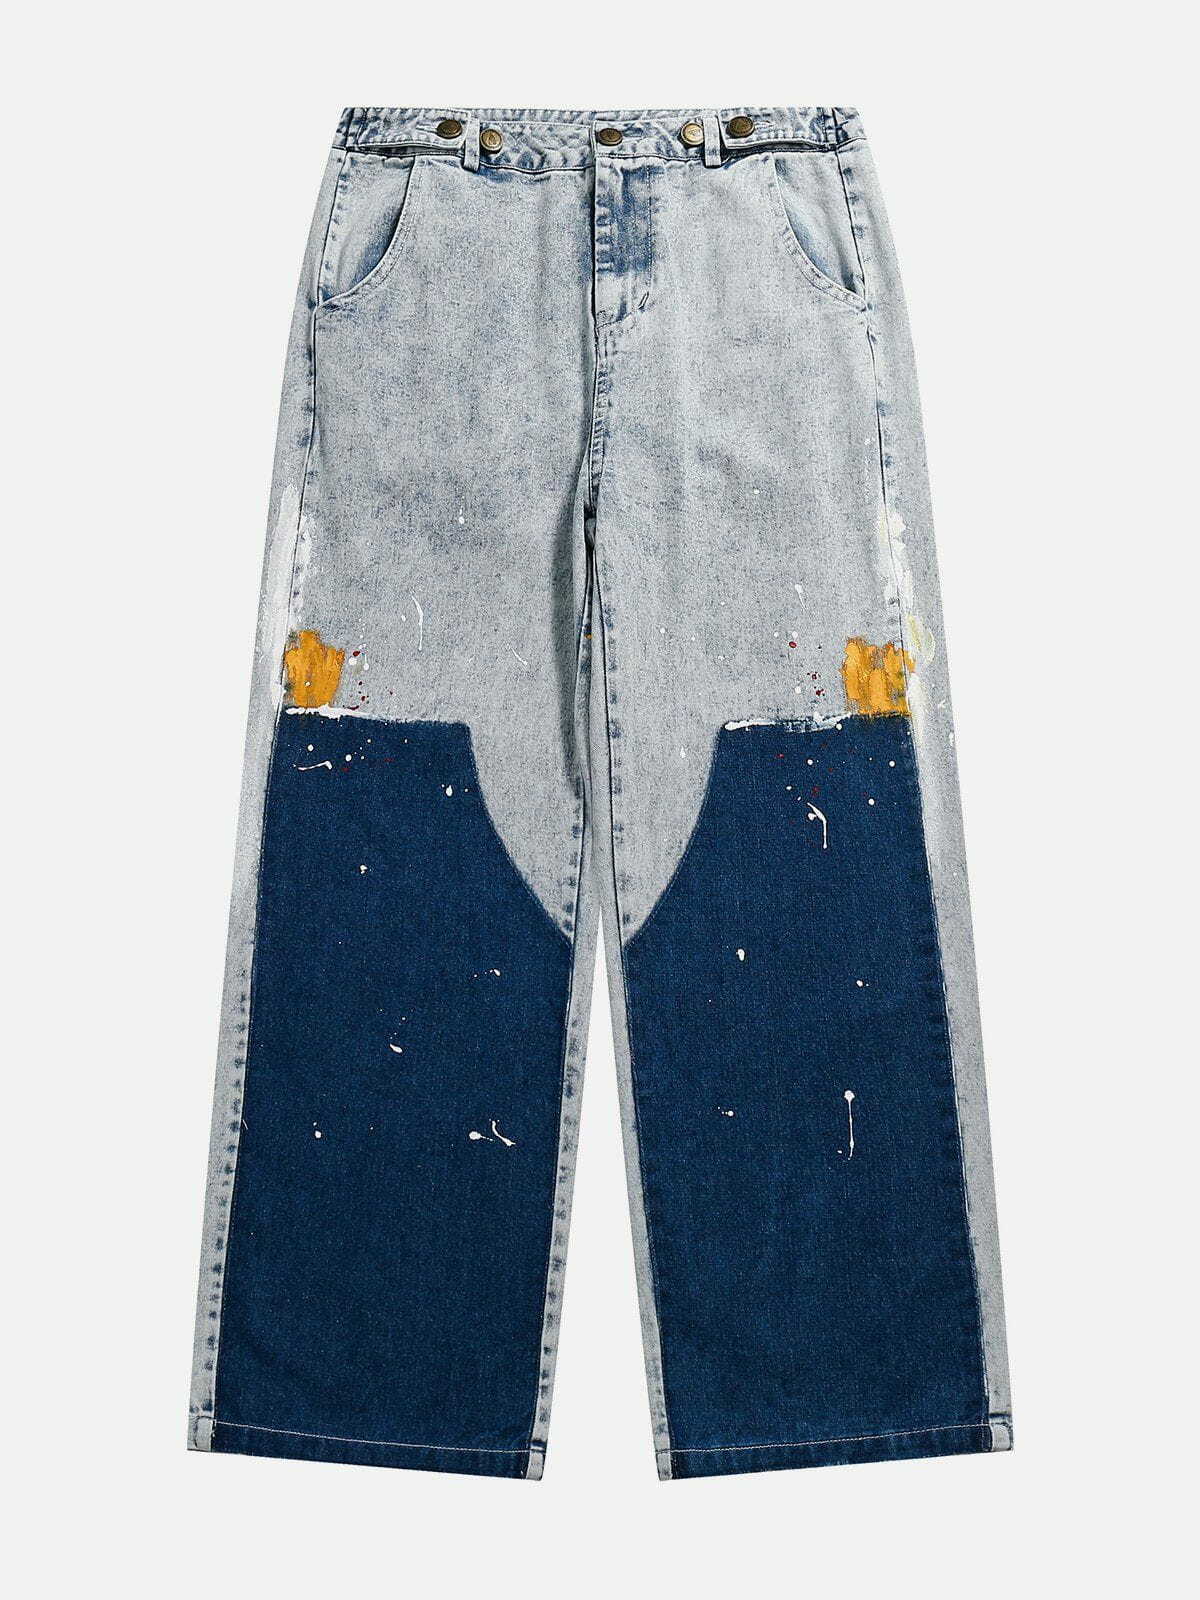 patchwork splash denim jeans edgy streetwear essential 3251